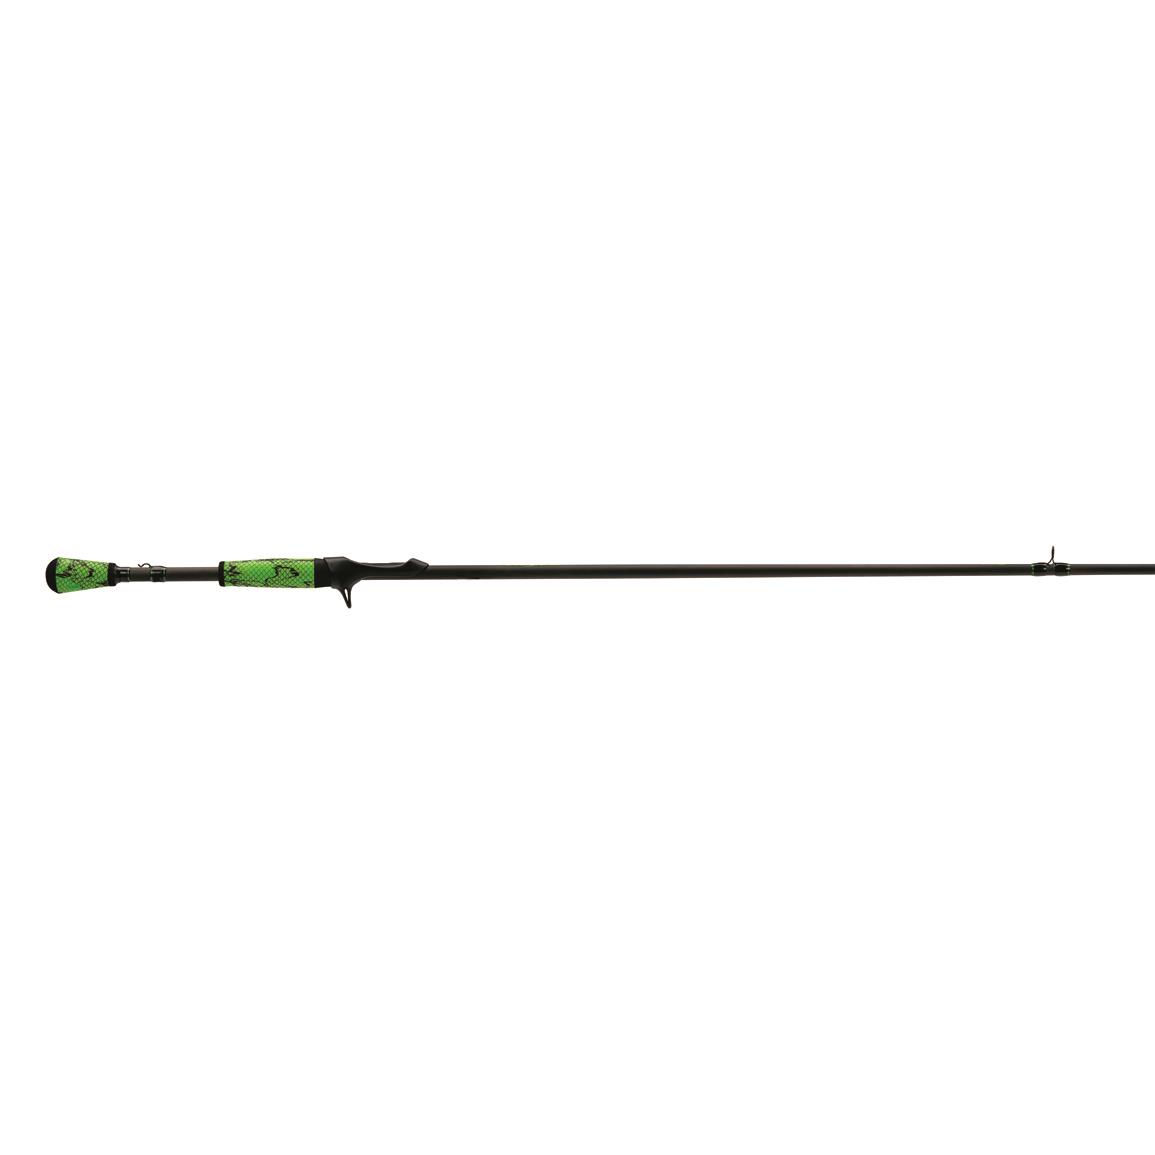 Abu Garcia Zenon Casting Rod, 6'9 Length, Medium Light Power, Fast Action  - 726900, Casting Rods at Sportsman's Guide